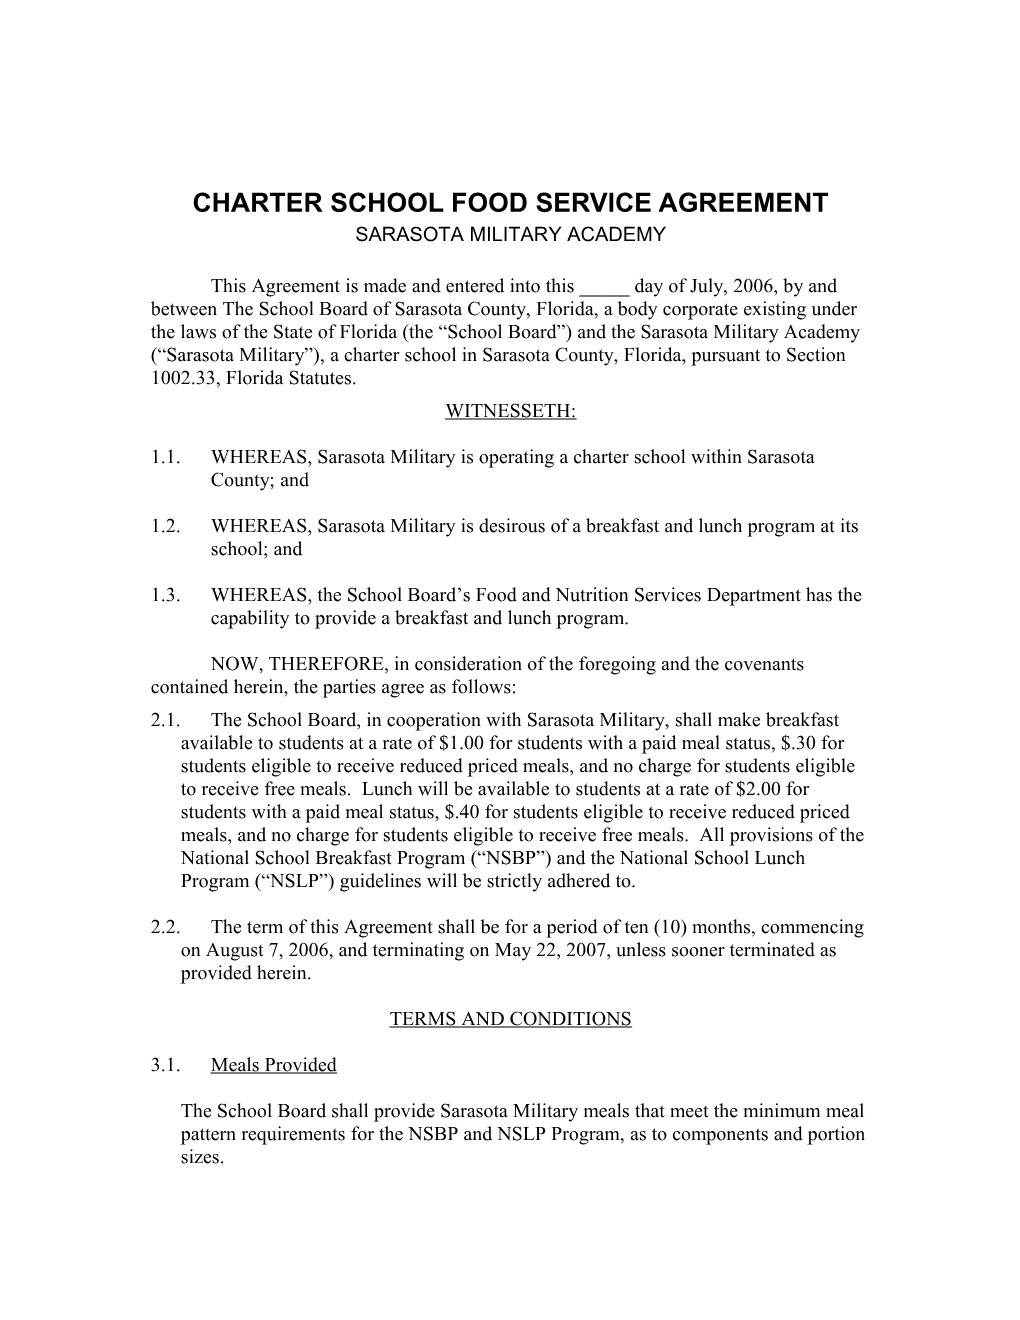 Charter School Good Service Agreement